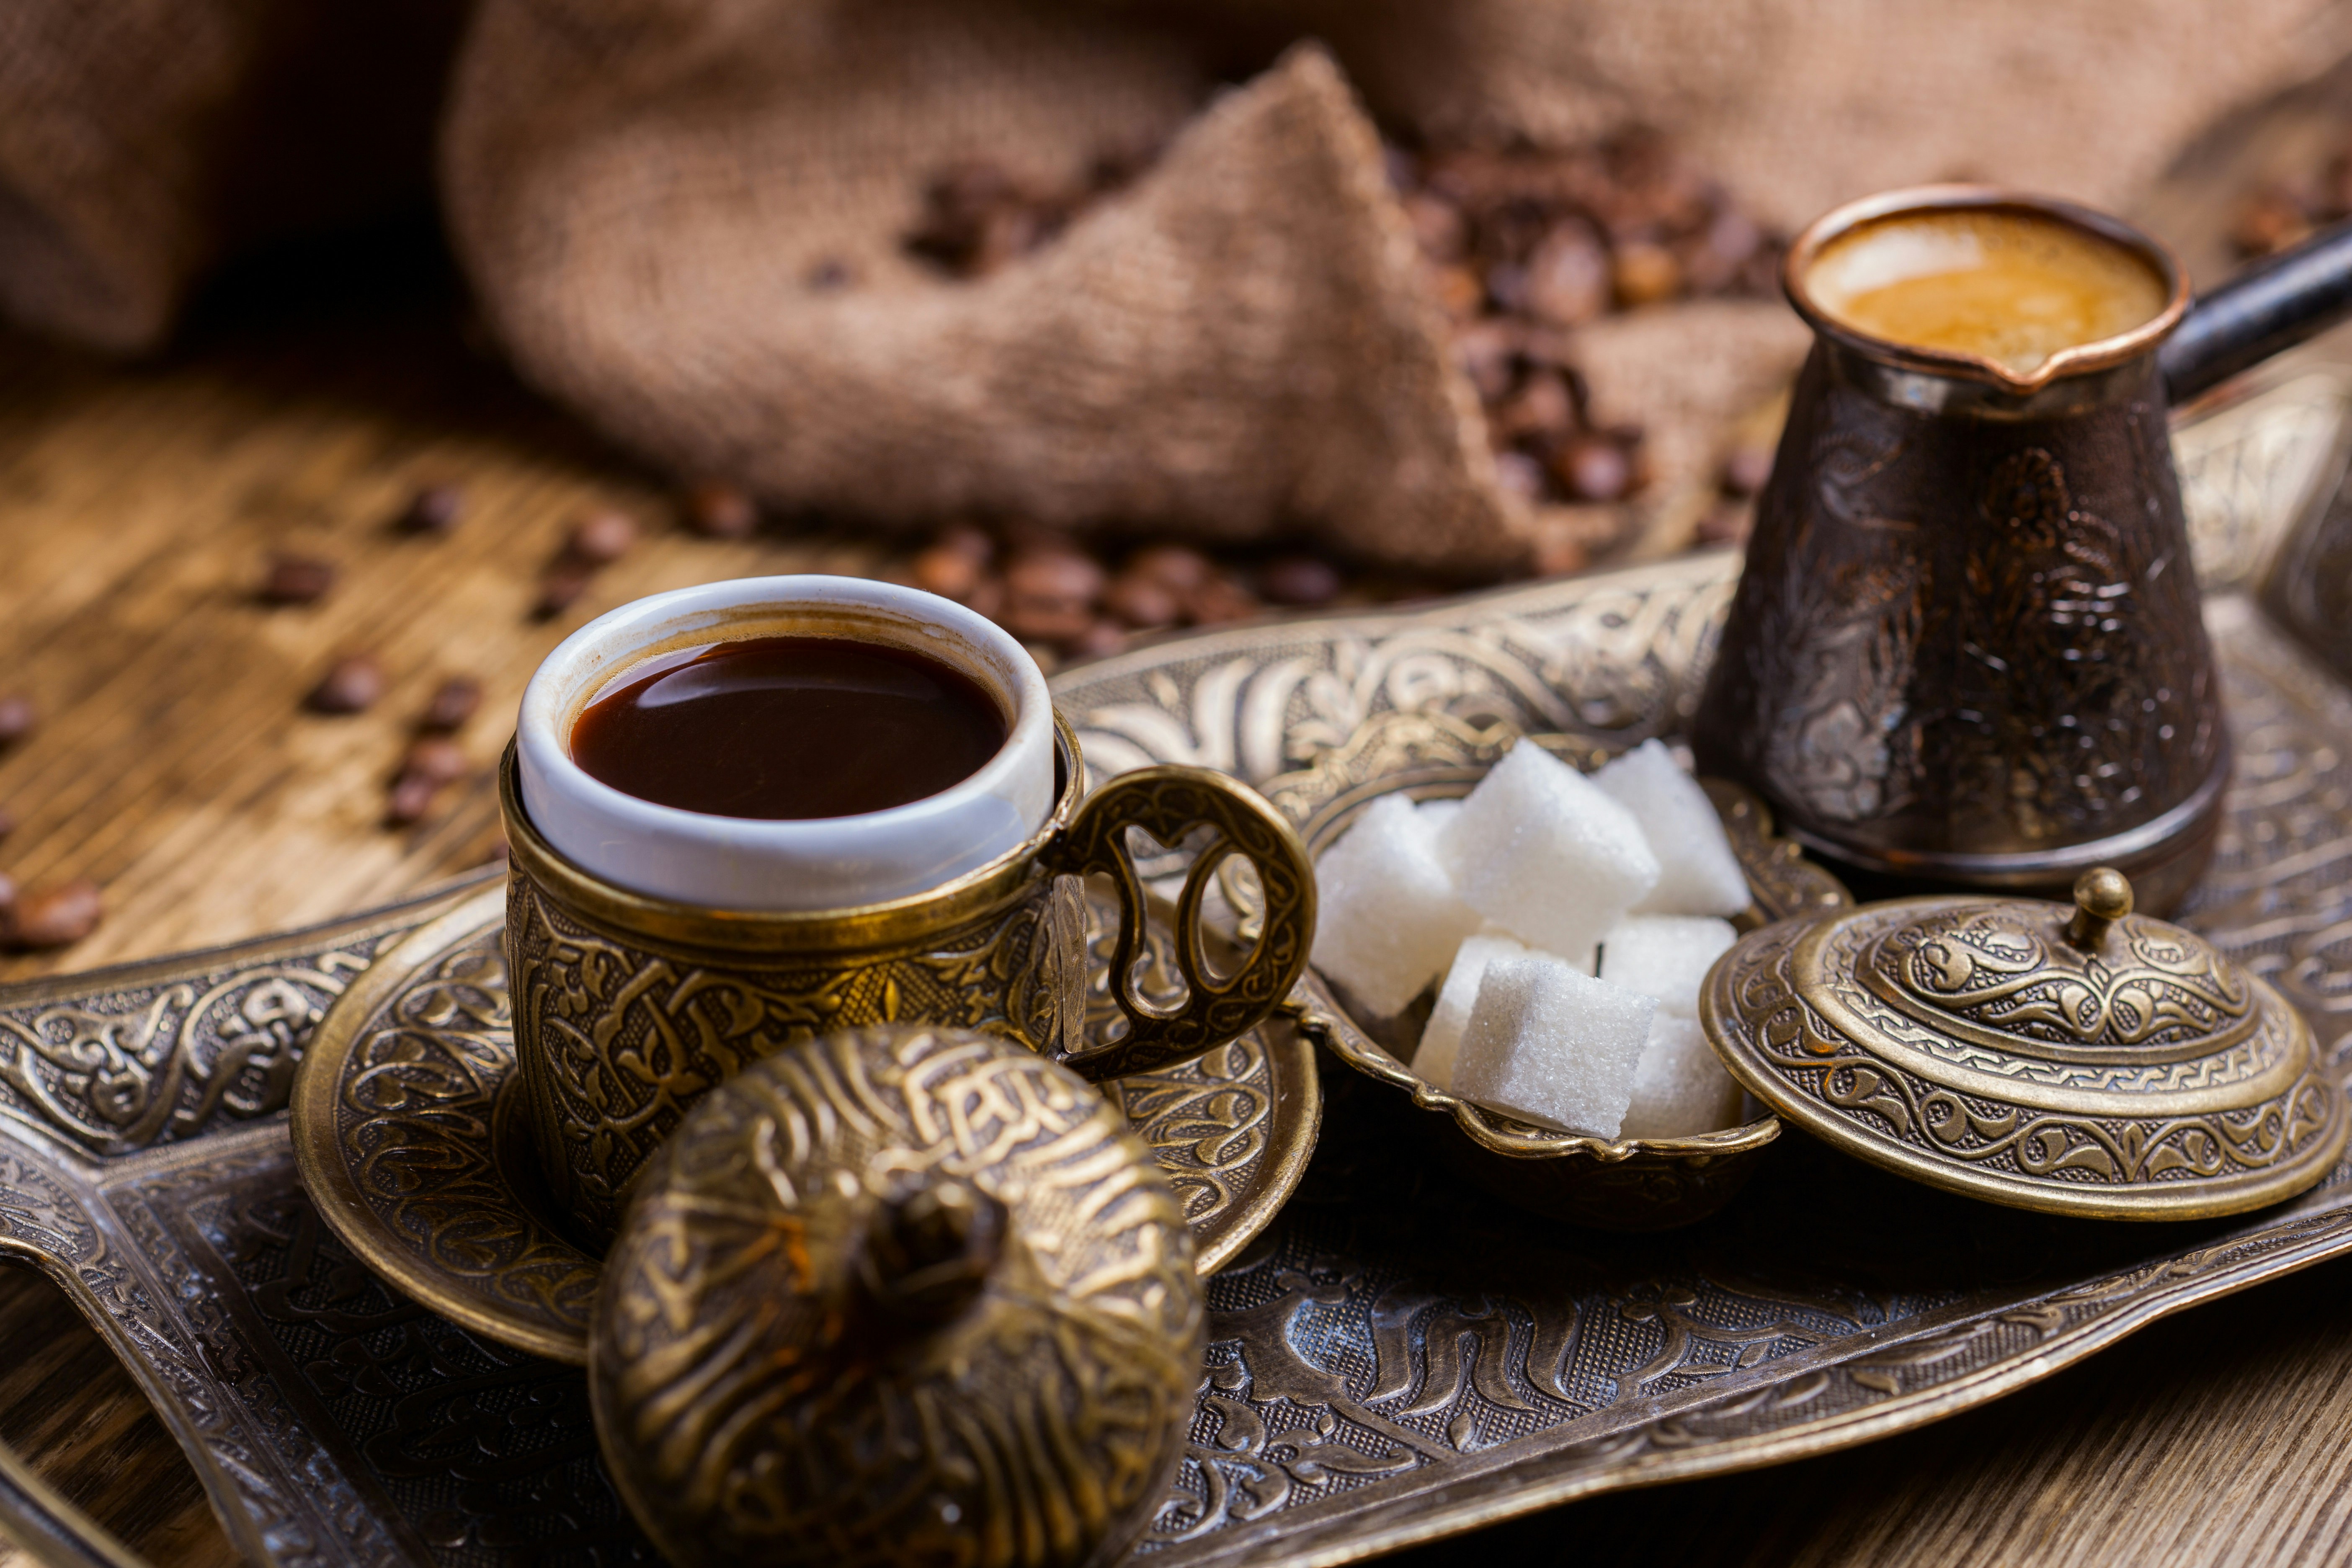 Turkish coffee served in ornate drinkware.